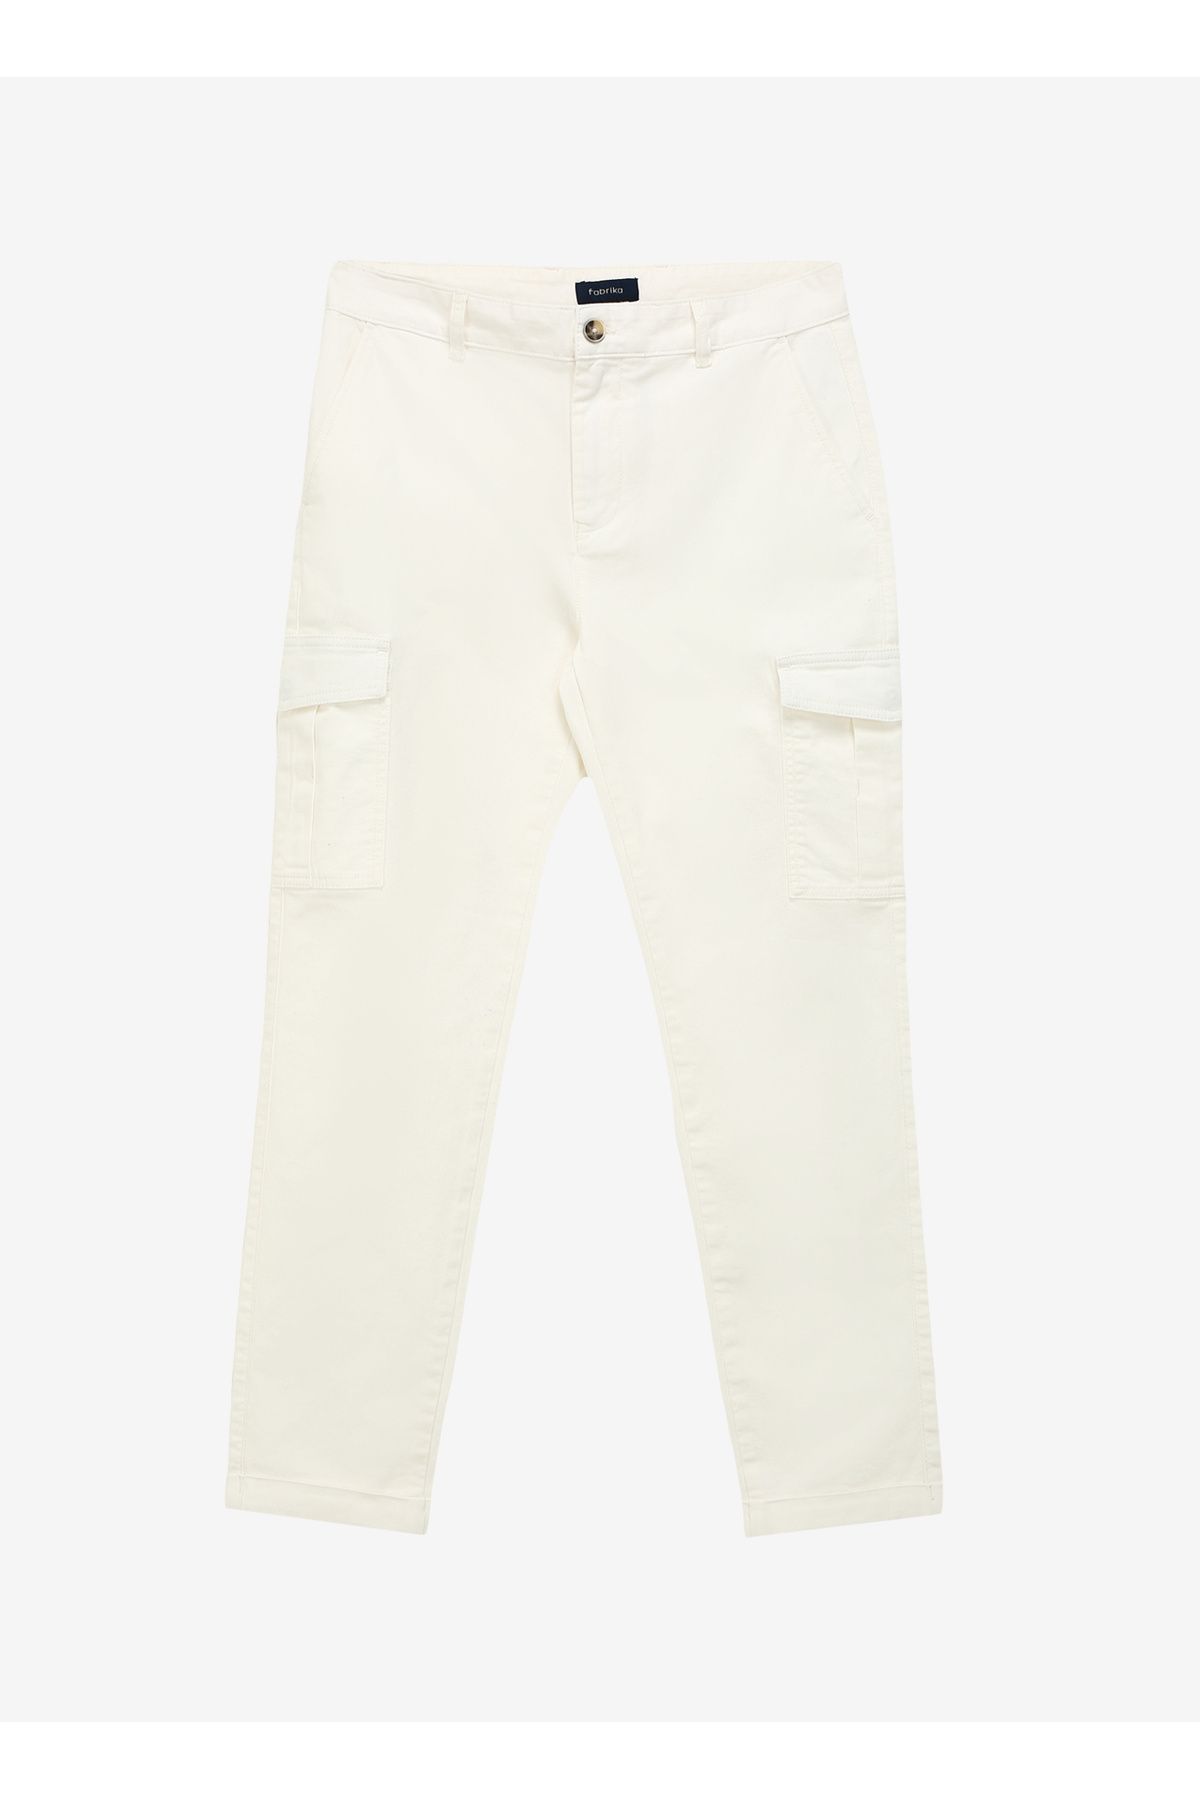 Fabrika Normal Bel Dar Paça Basic Kırık Beyaz Erkek Kargo Pantolon F3WM-PNT162